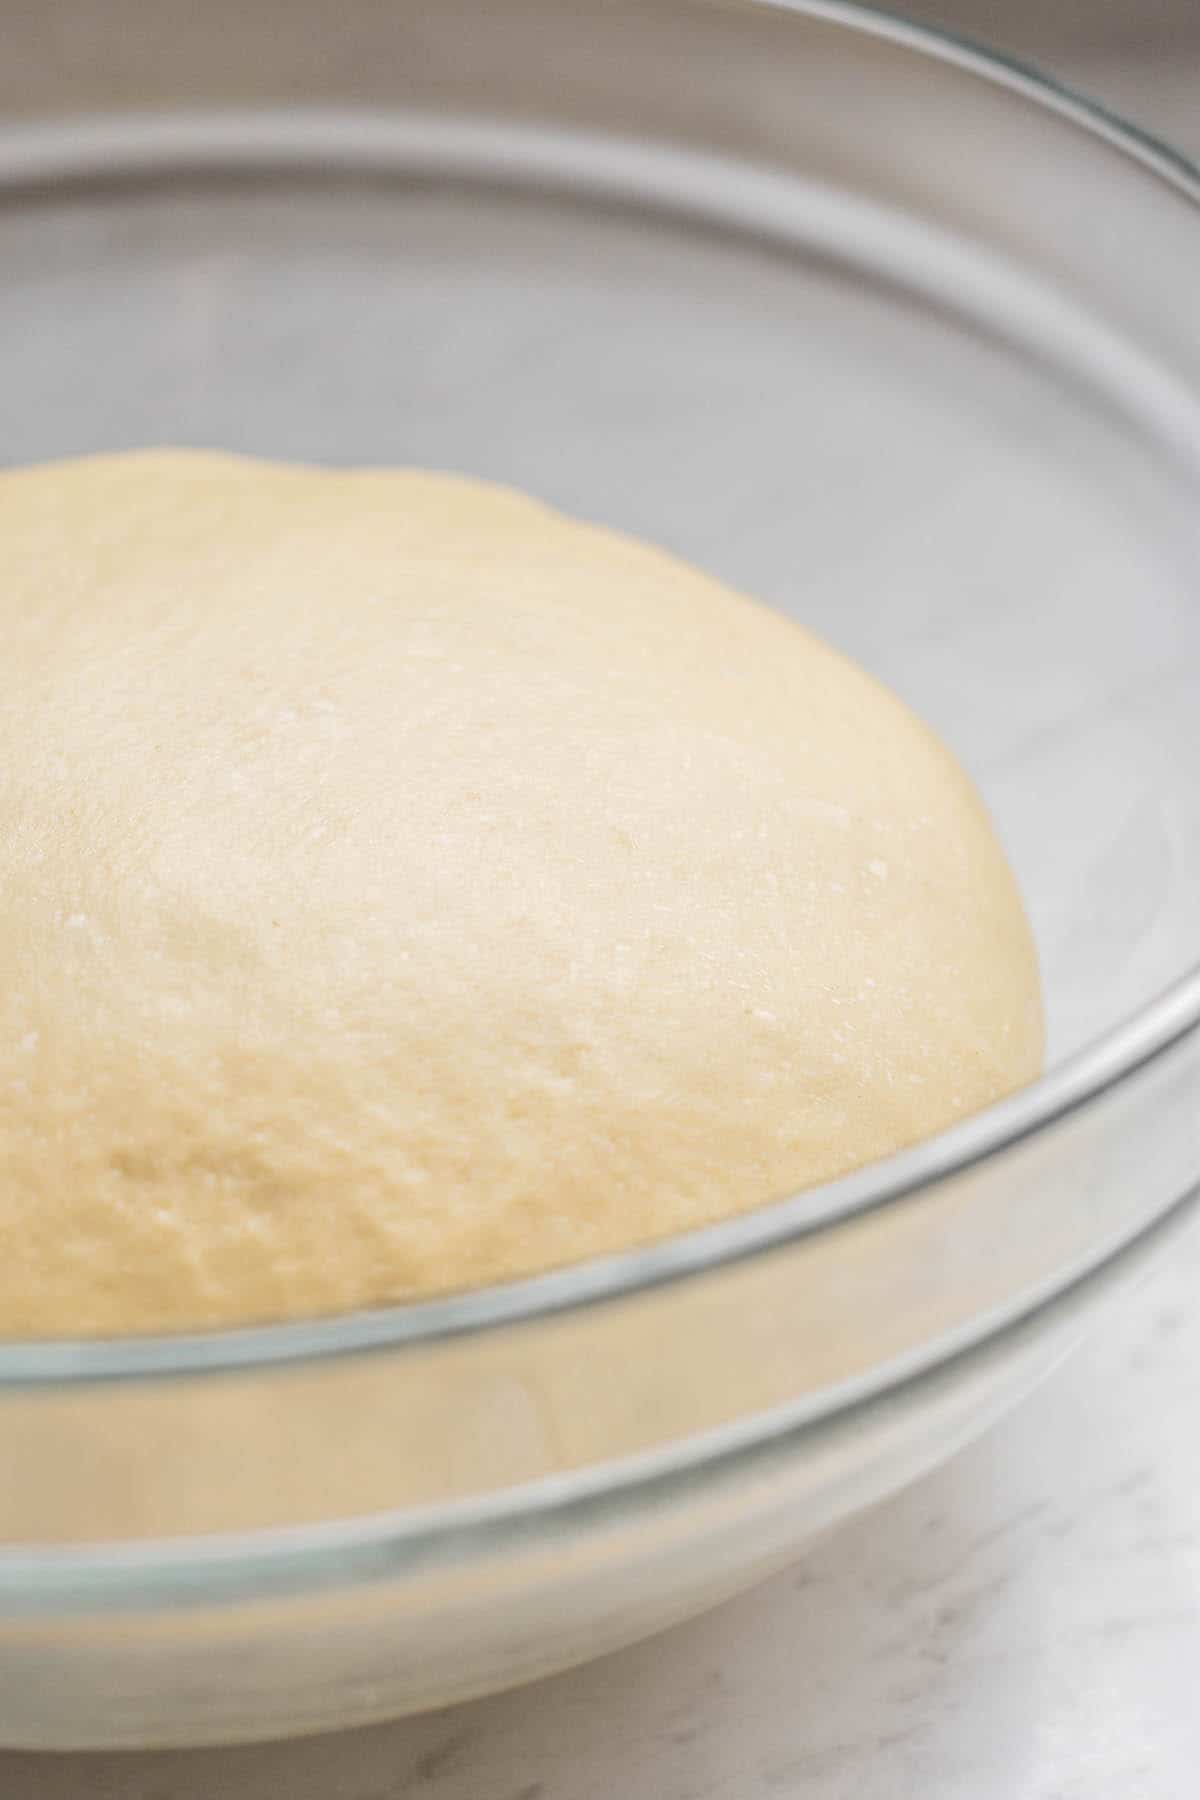 dough in a bowl.